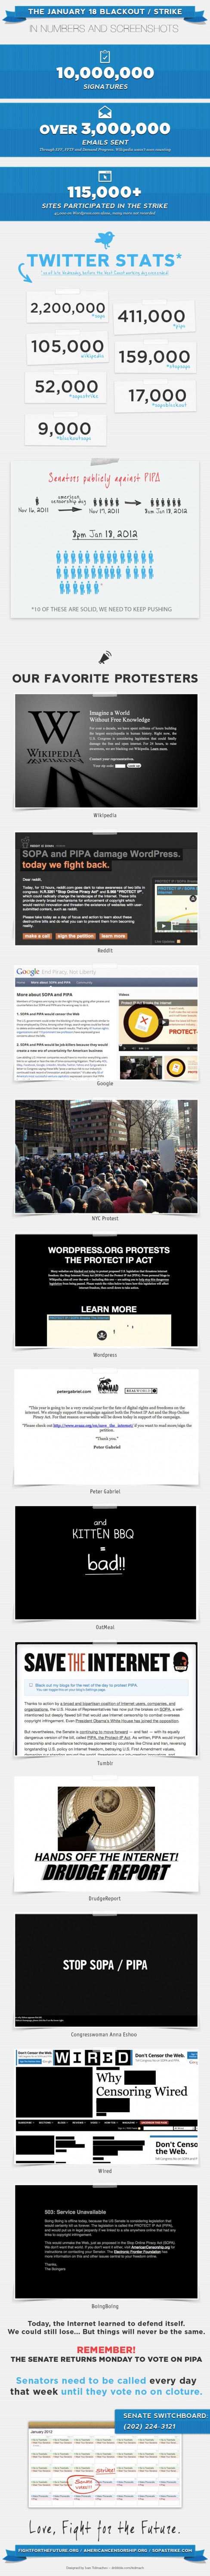 SOPAstrike's anti-SOPA anti-PIPA infographic